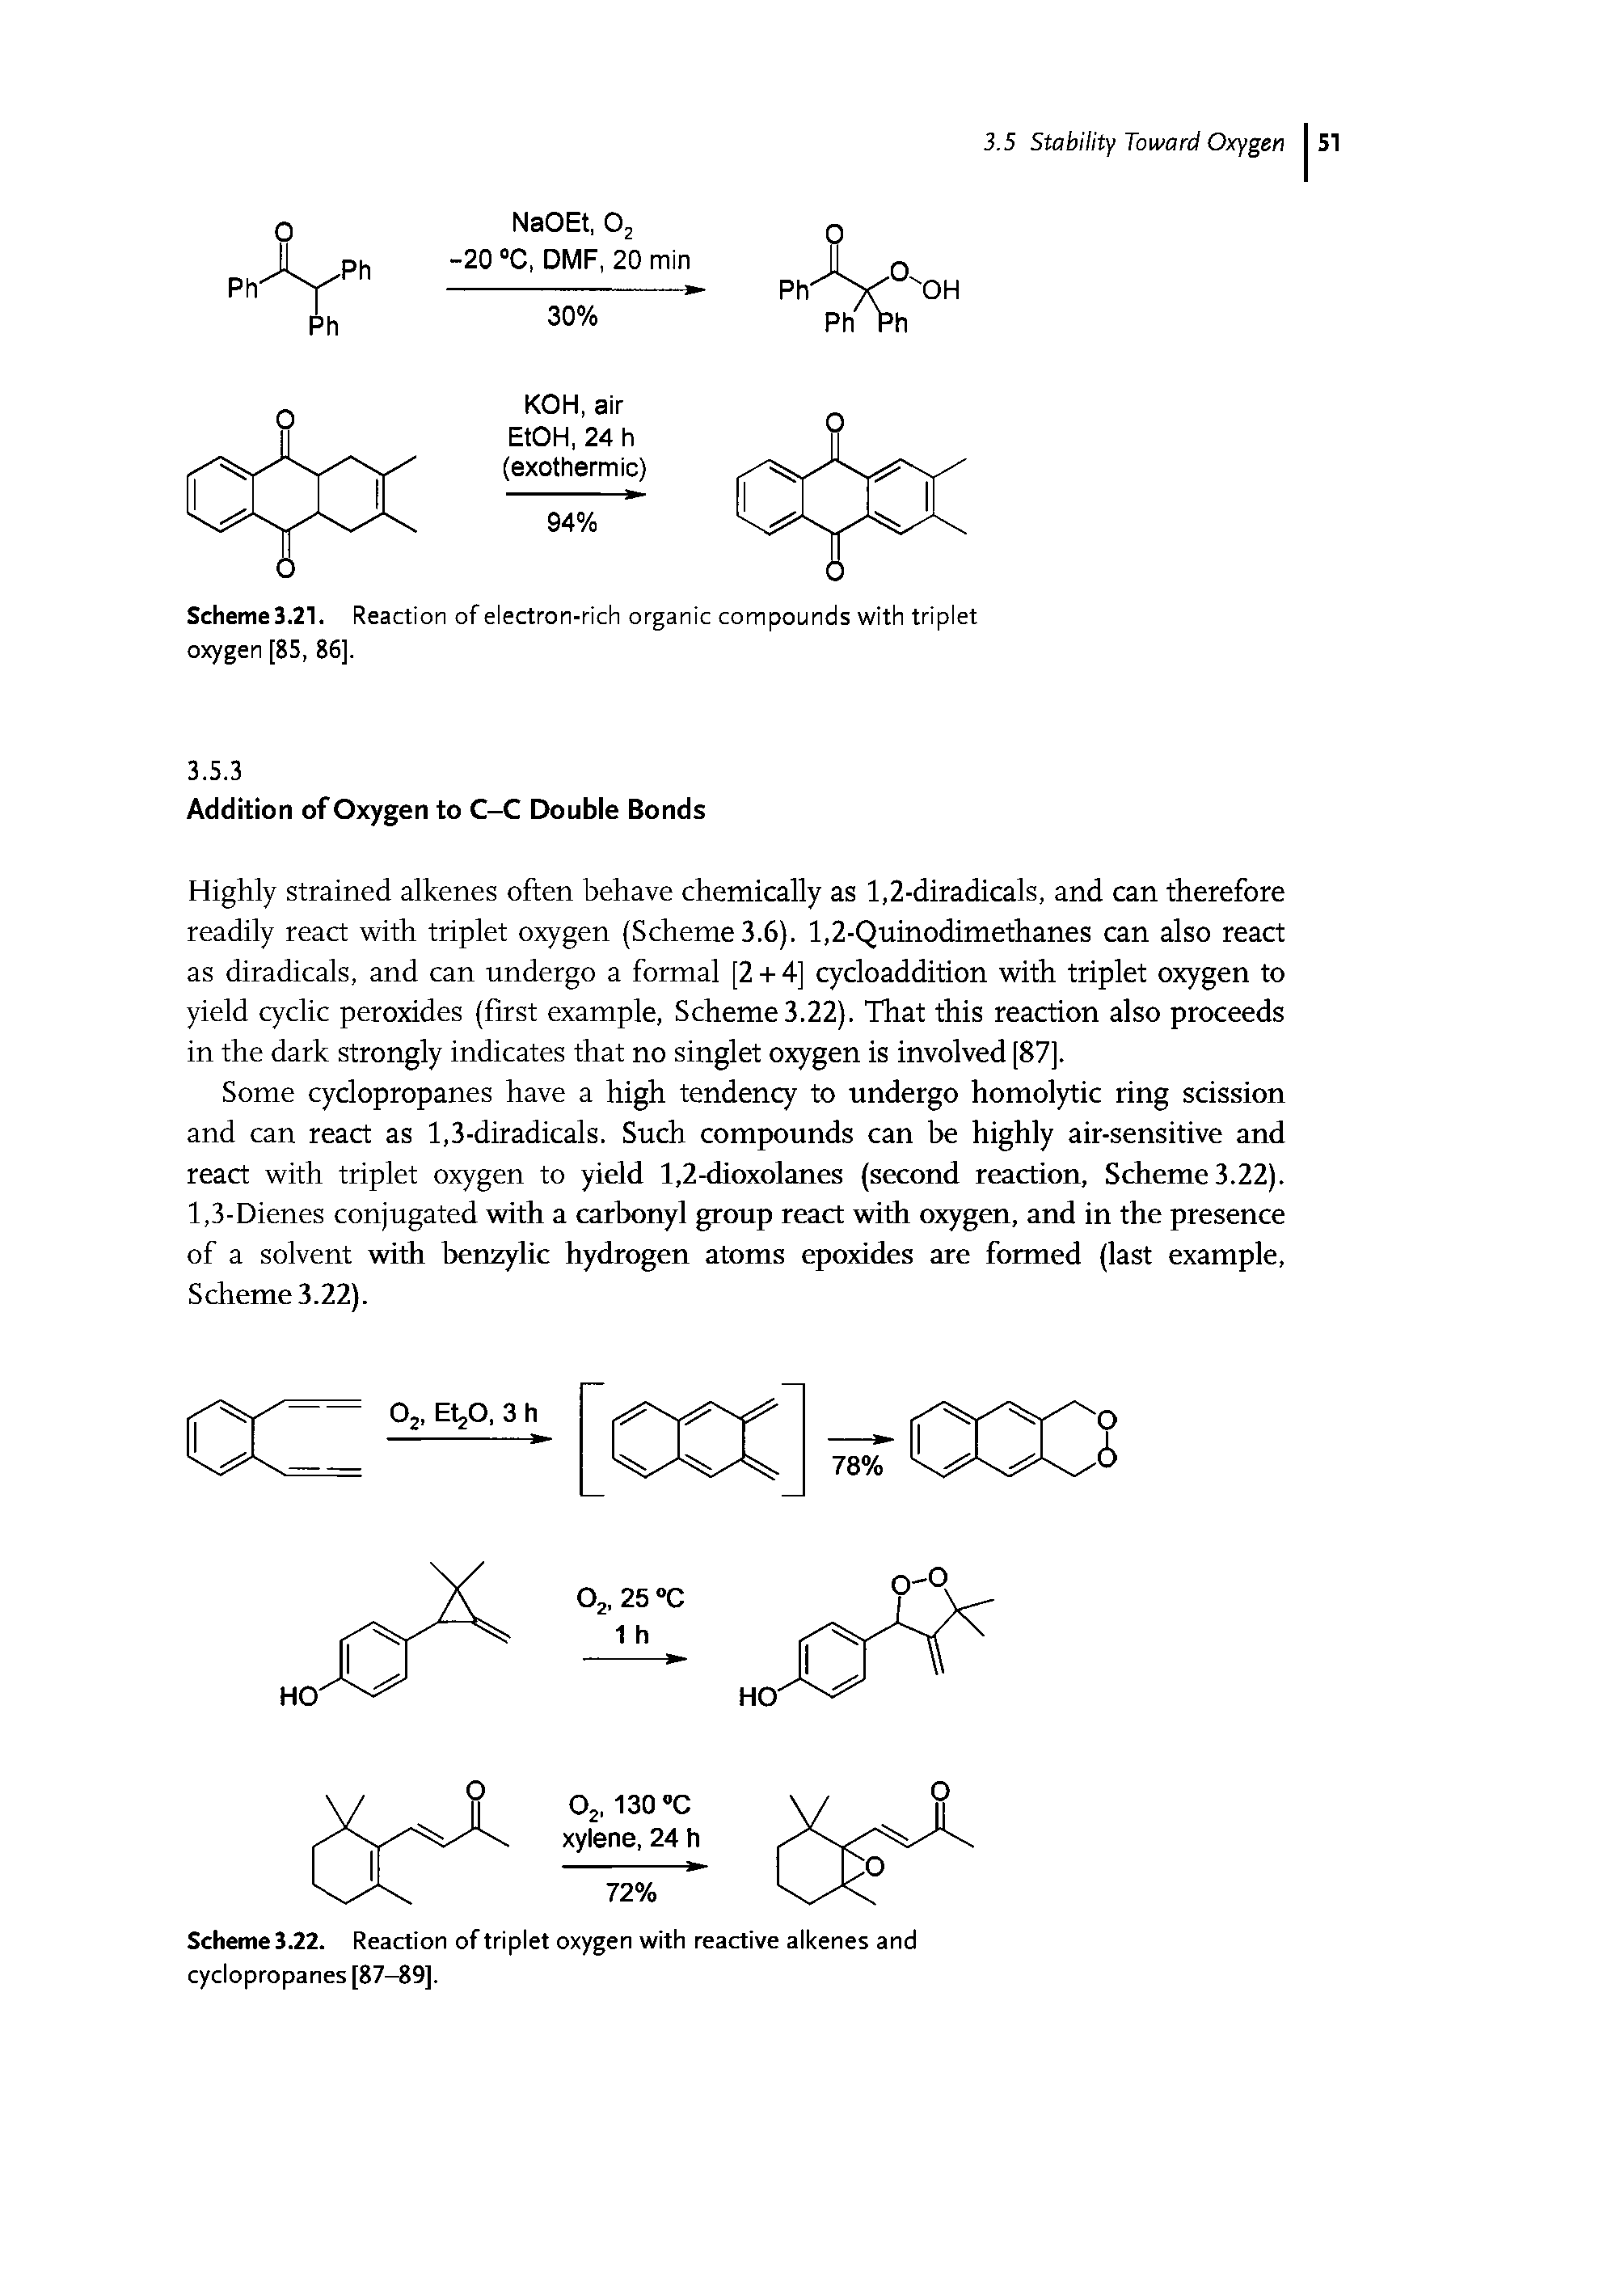 Scheme 3.22. Reaction of triplet oxygen with reactive alkenes and cyclopropanes [87-89].